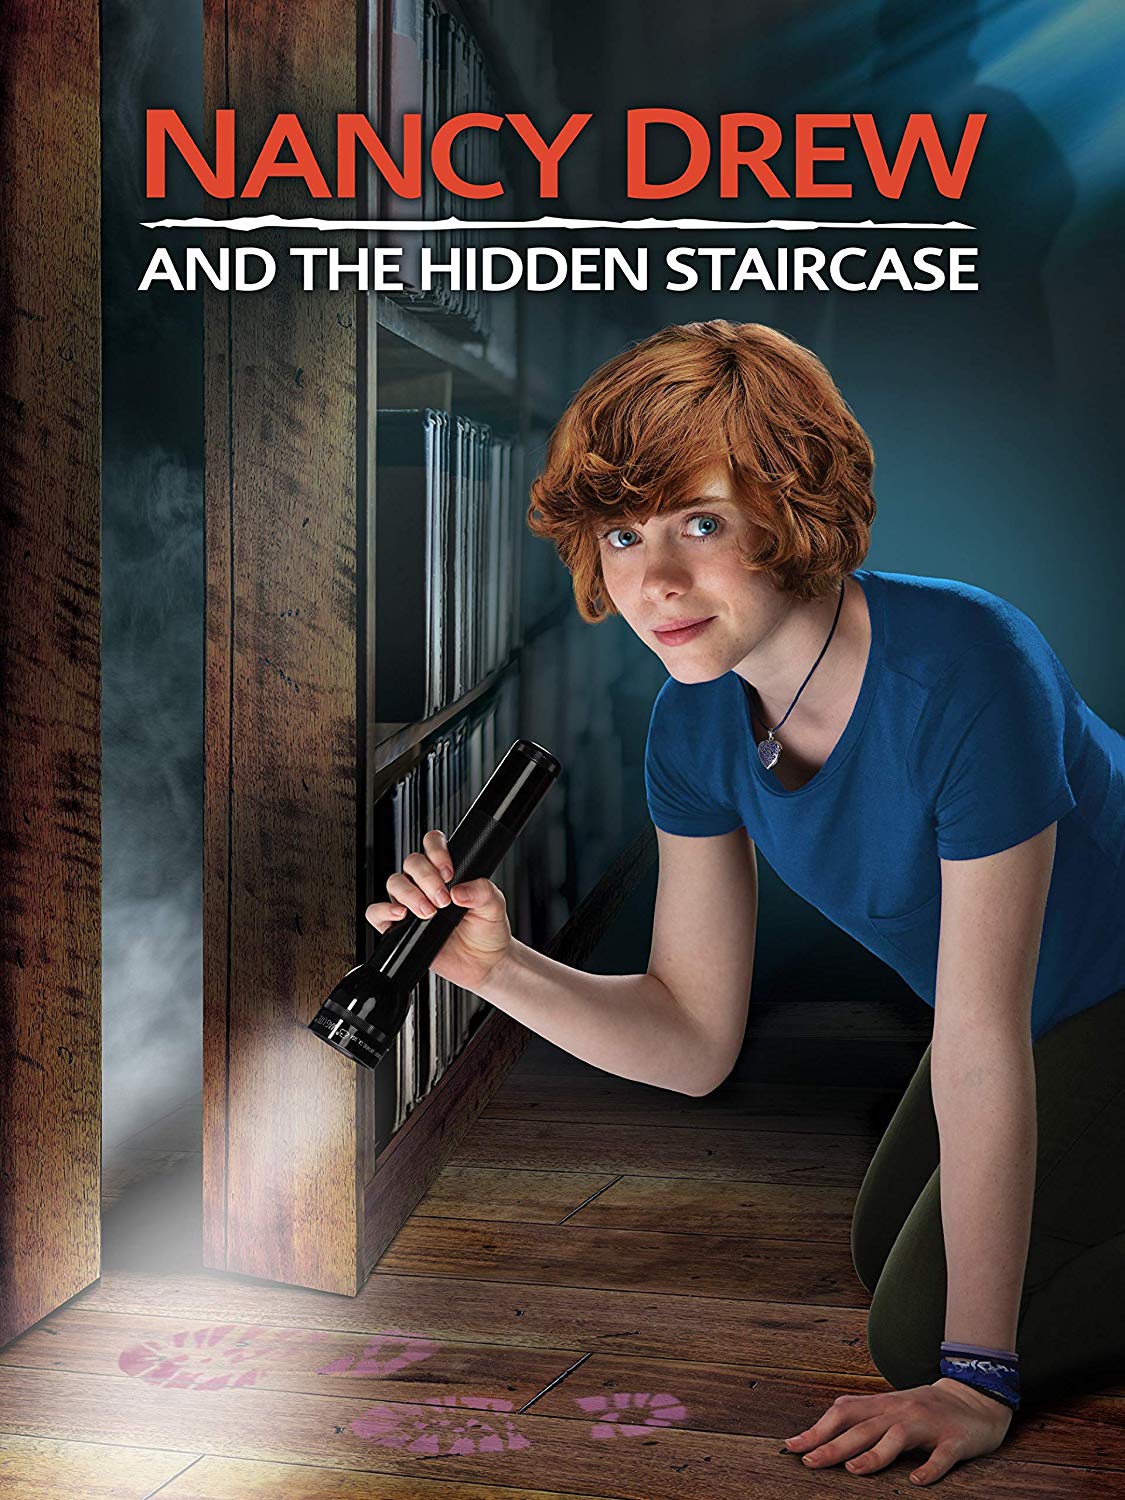 Nonton film Nancy Drew and the Hidden Staircase layarkaca21 indoxx1 ganool online streaming terbaru